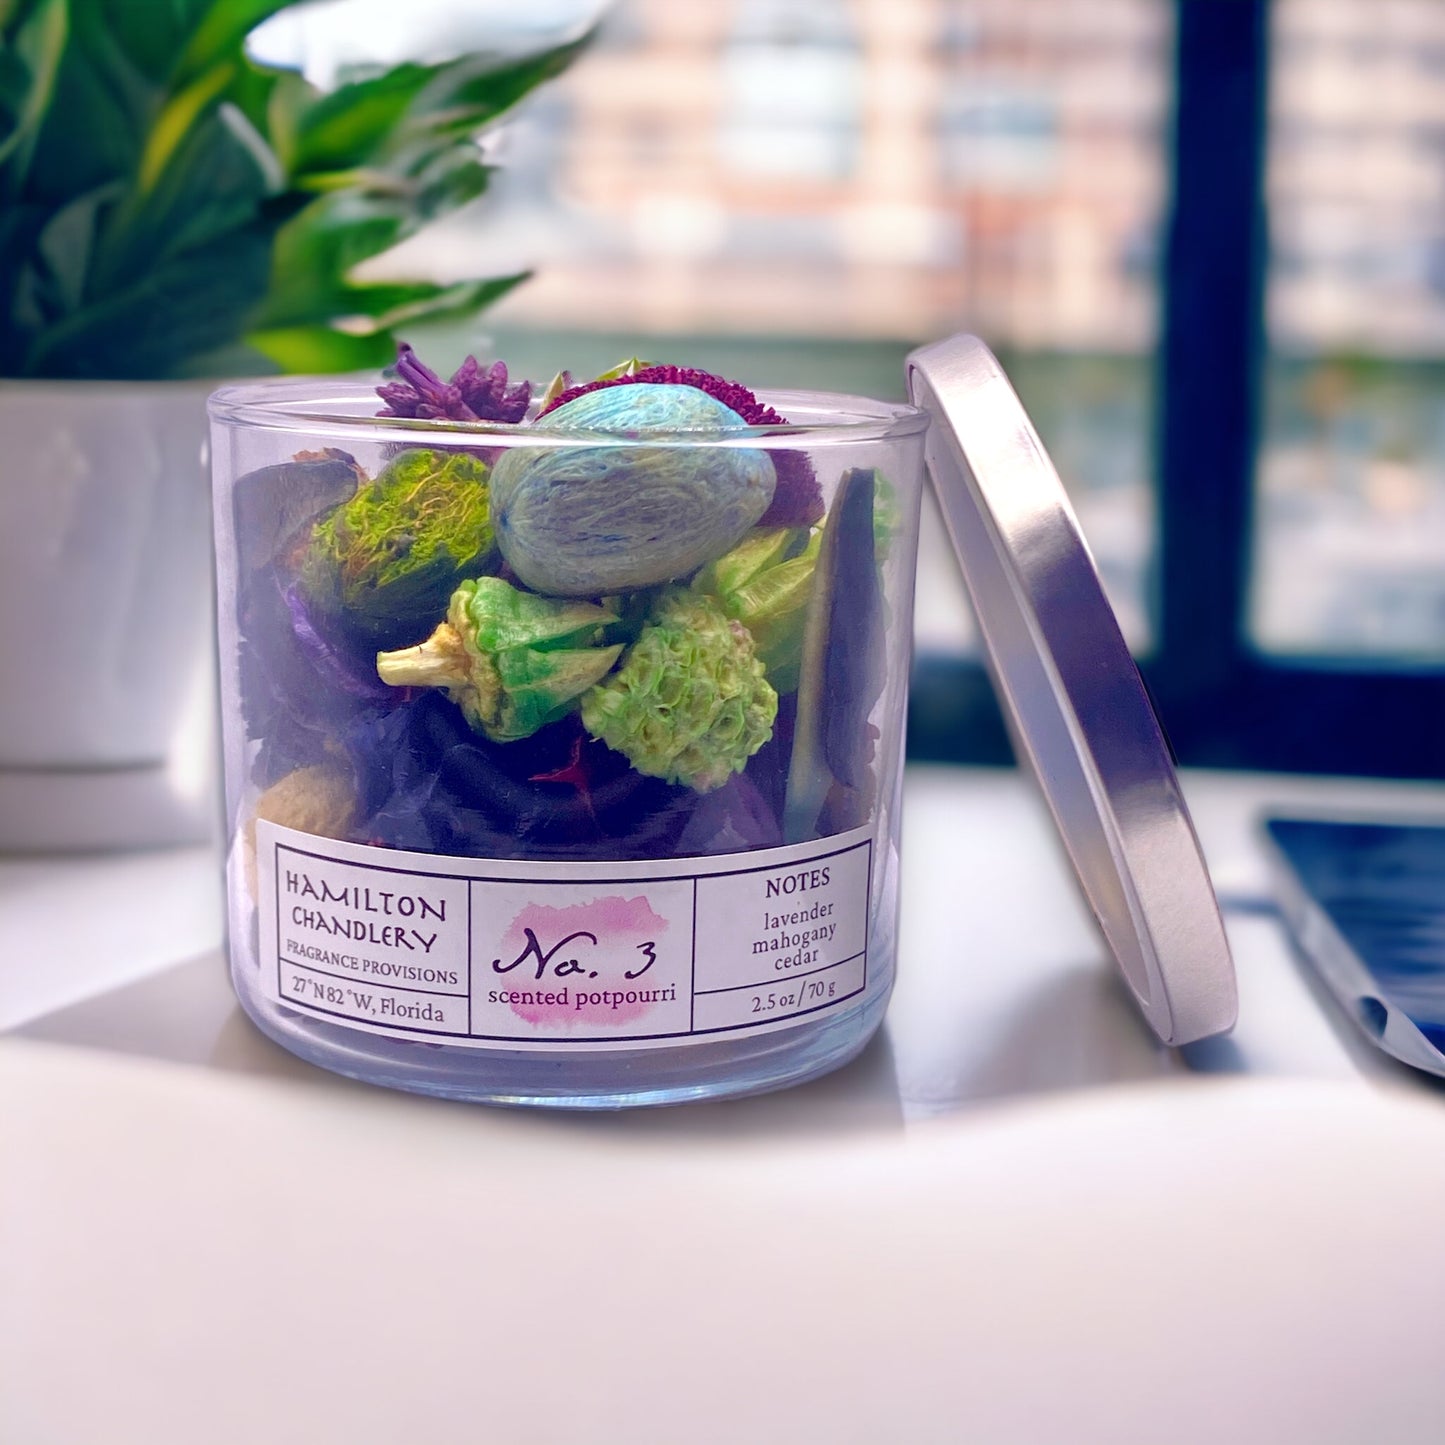 Fragrance No. 3 Potpourri Jar on Workstation with Window View | Hamilton Chandlery